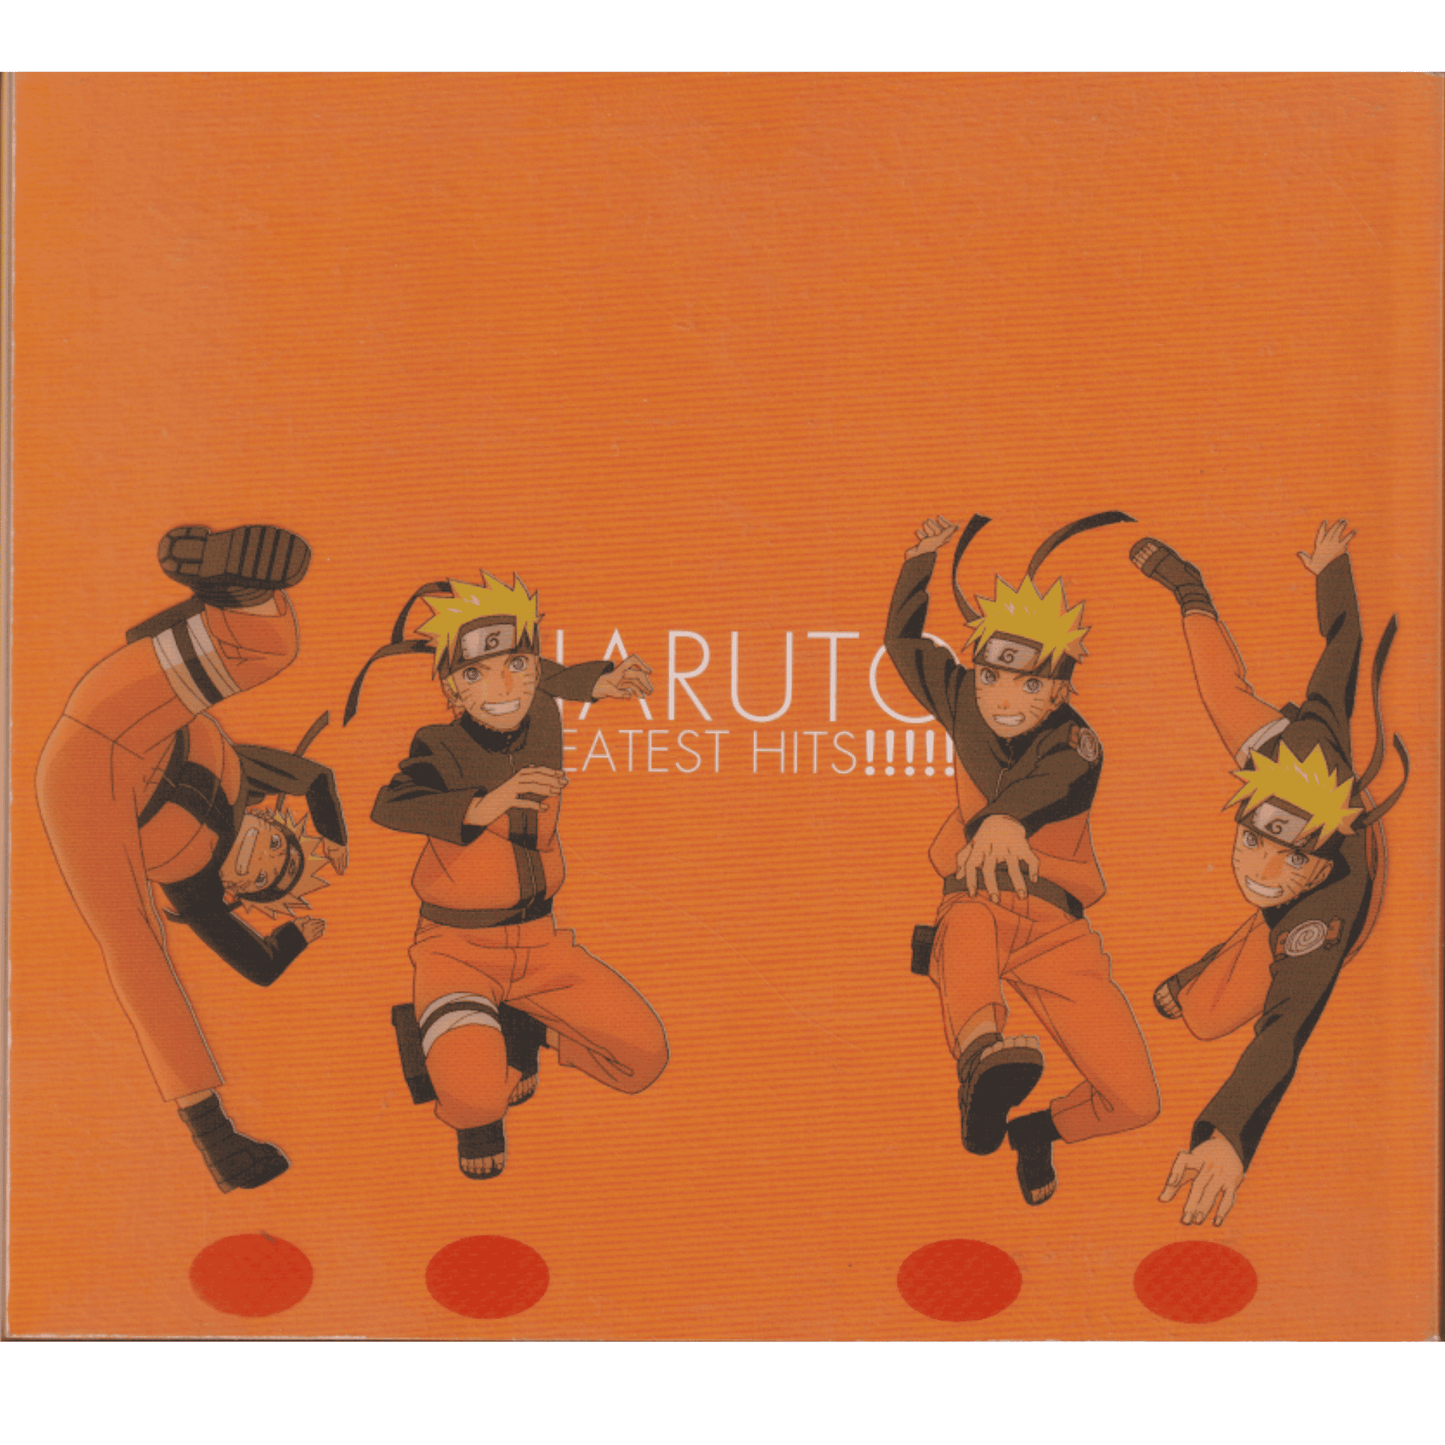 Naruto Gratest Hits !!!!! - Soundtrack CD